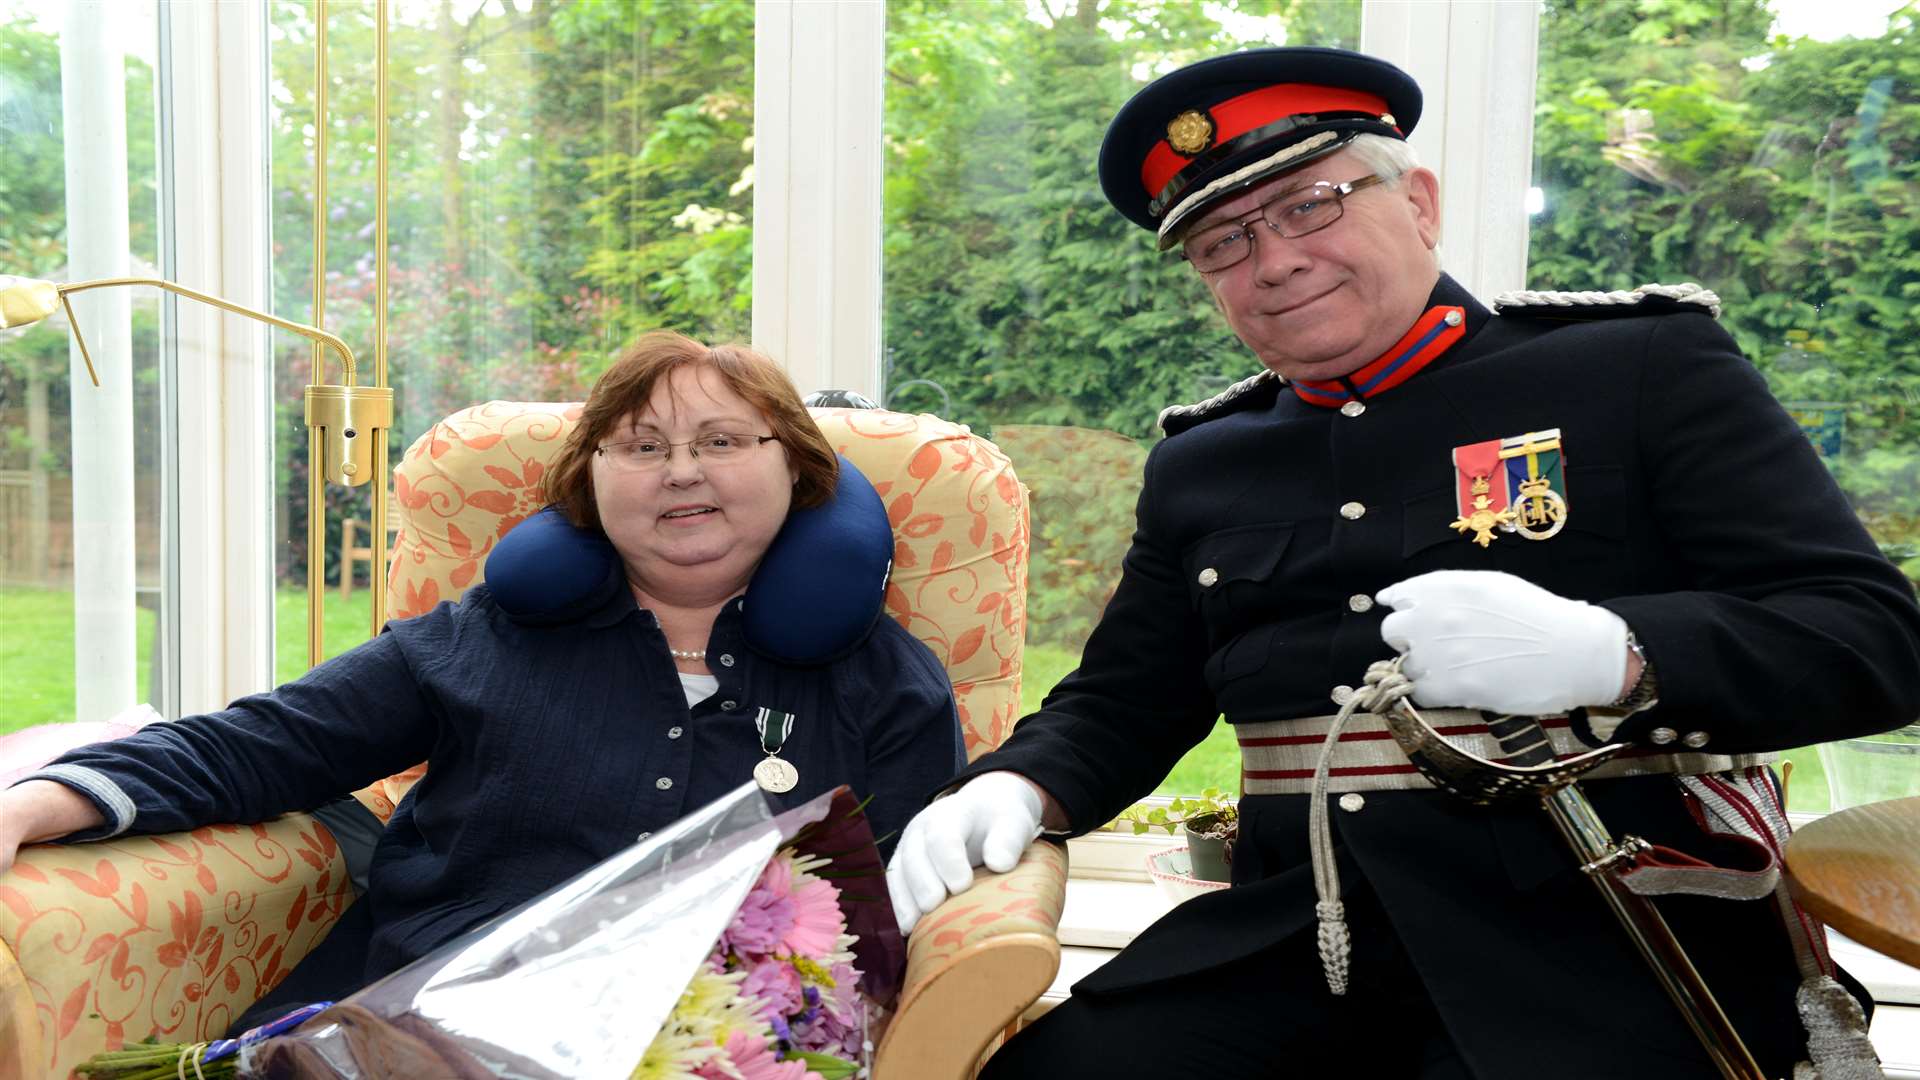 Lynn receiving her medal from Deputy Lieutenant of Bexley, Major David Hewer.